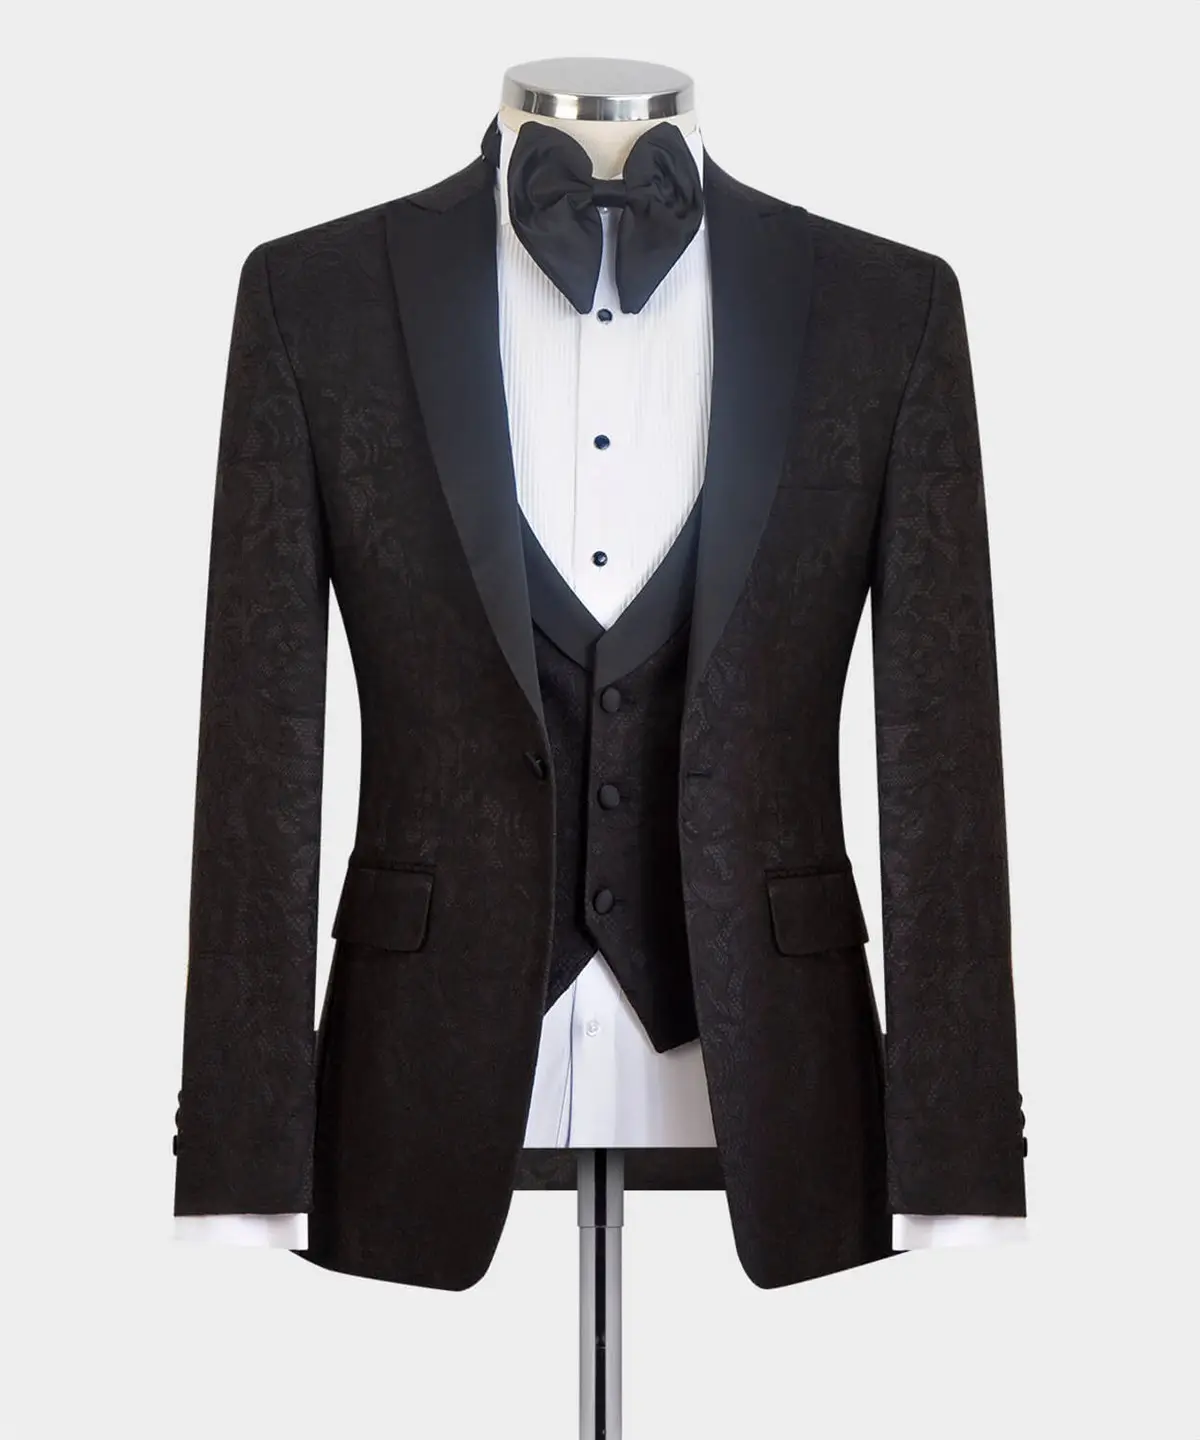 Premium Quality Maserto Slim Fit Black Tuxedo Flower Patterned Wholesale Product - The Most Preferred Men's Slim Fit Tuxedo